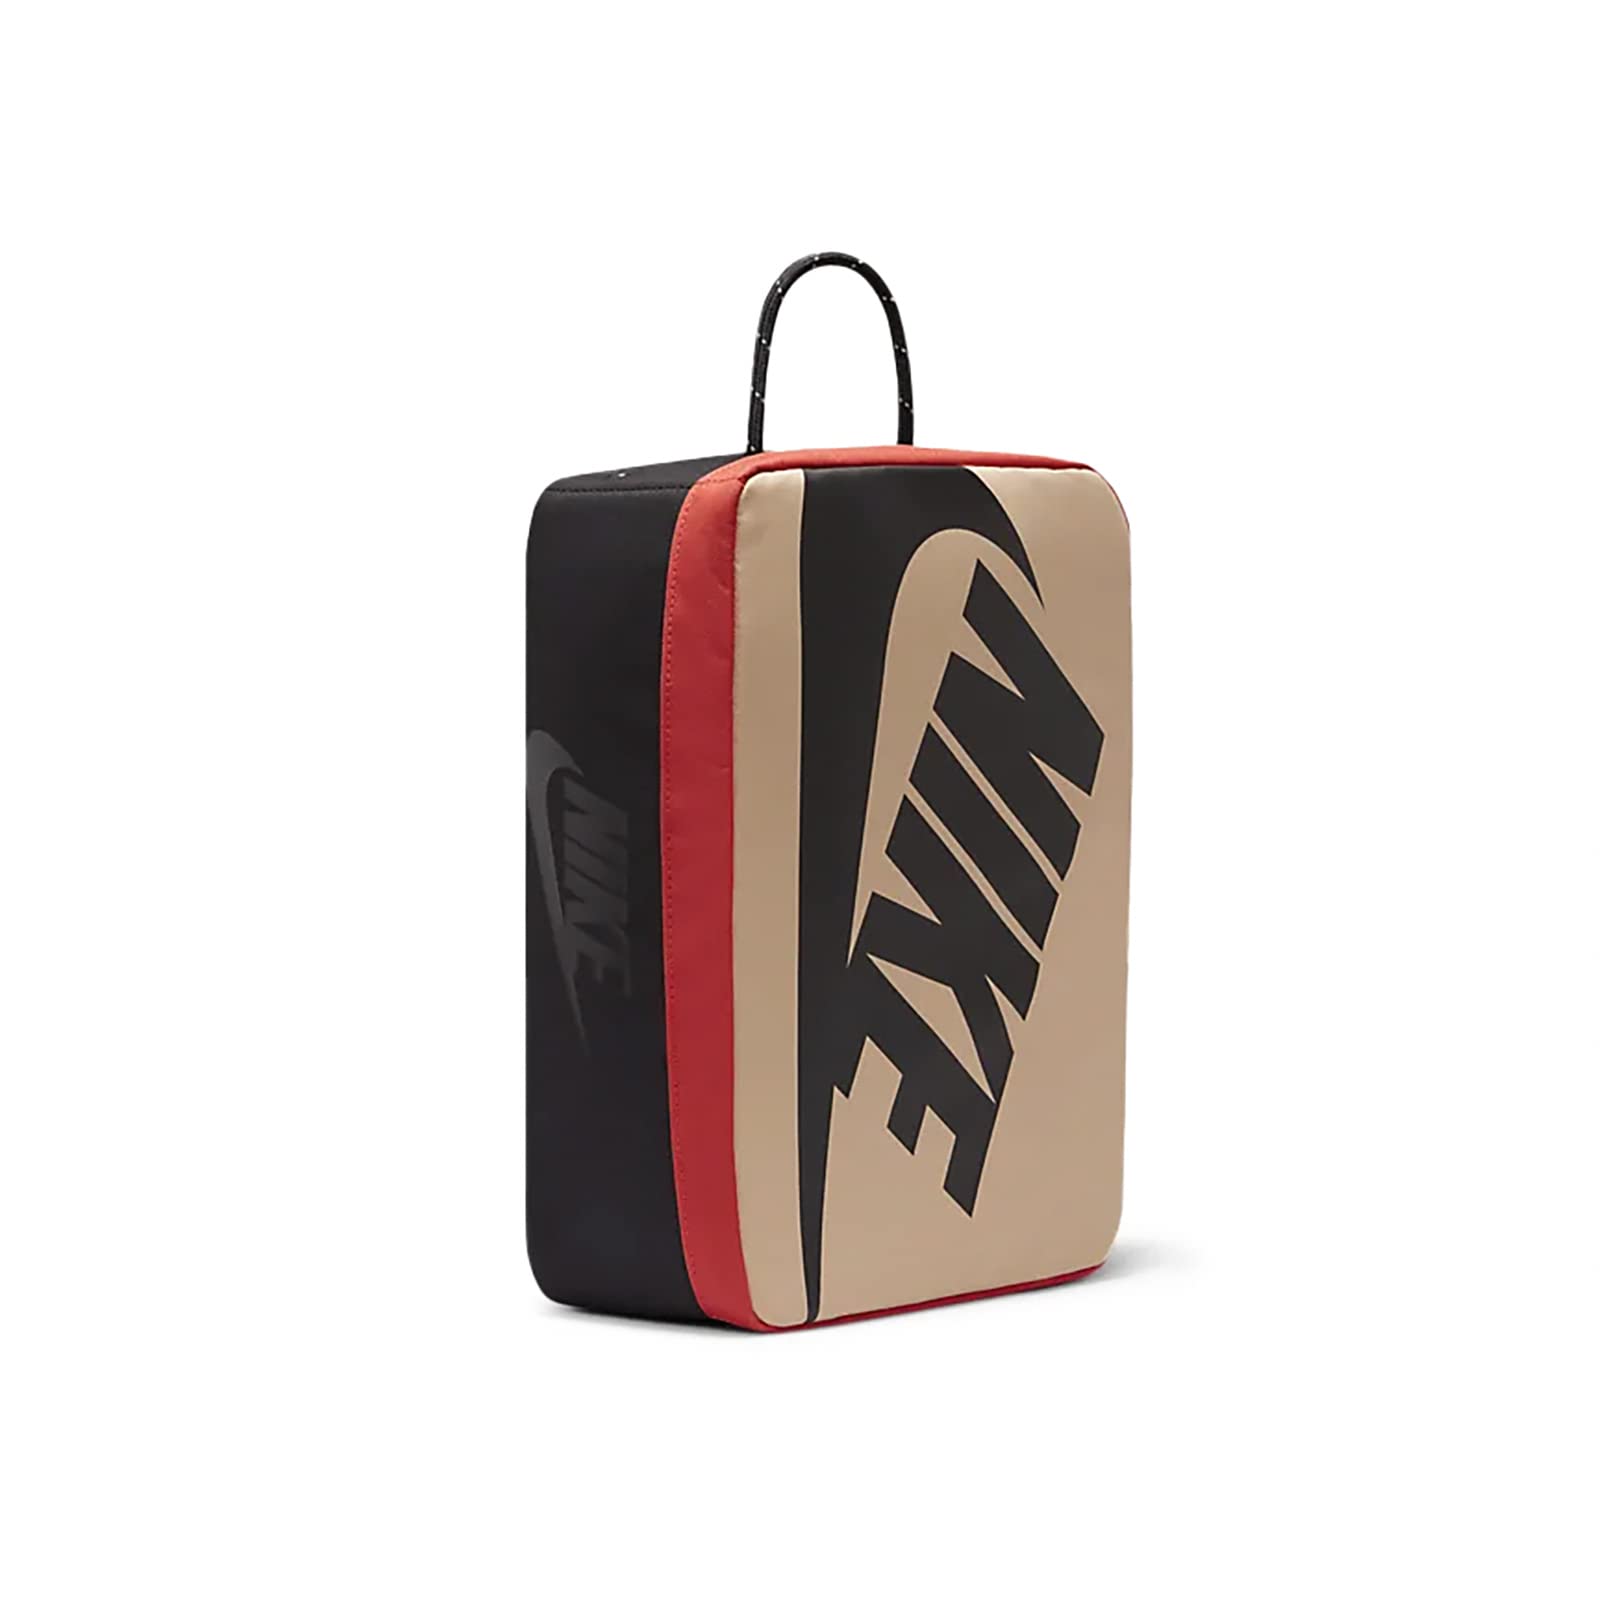 Nike Shoe Box Bag Vintage (VINTAGE BLACK/RED/BROWN) - Caps Fitted